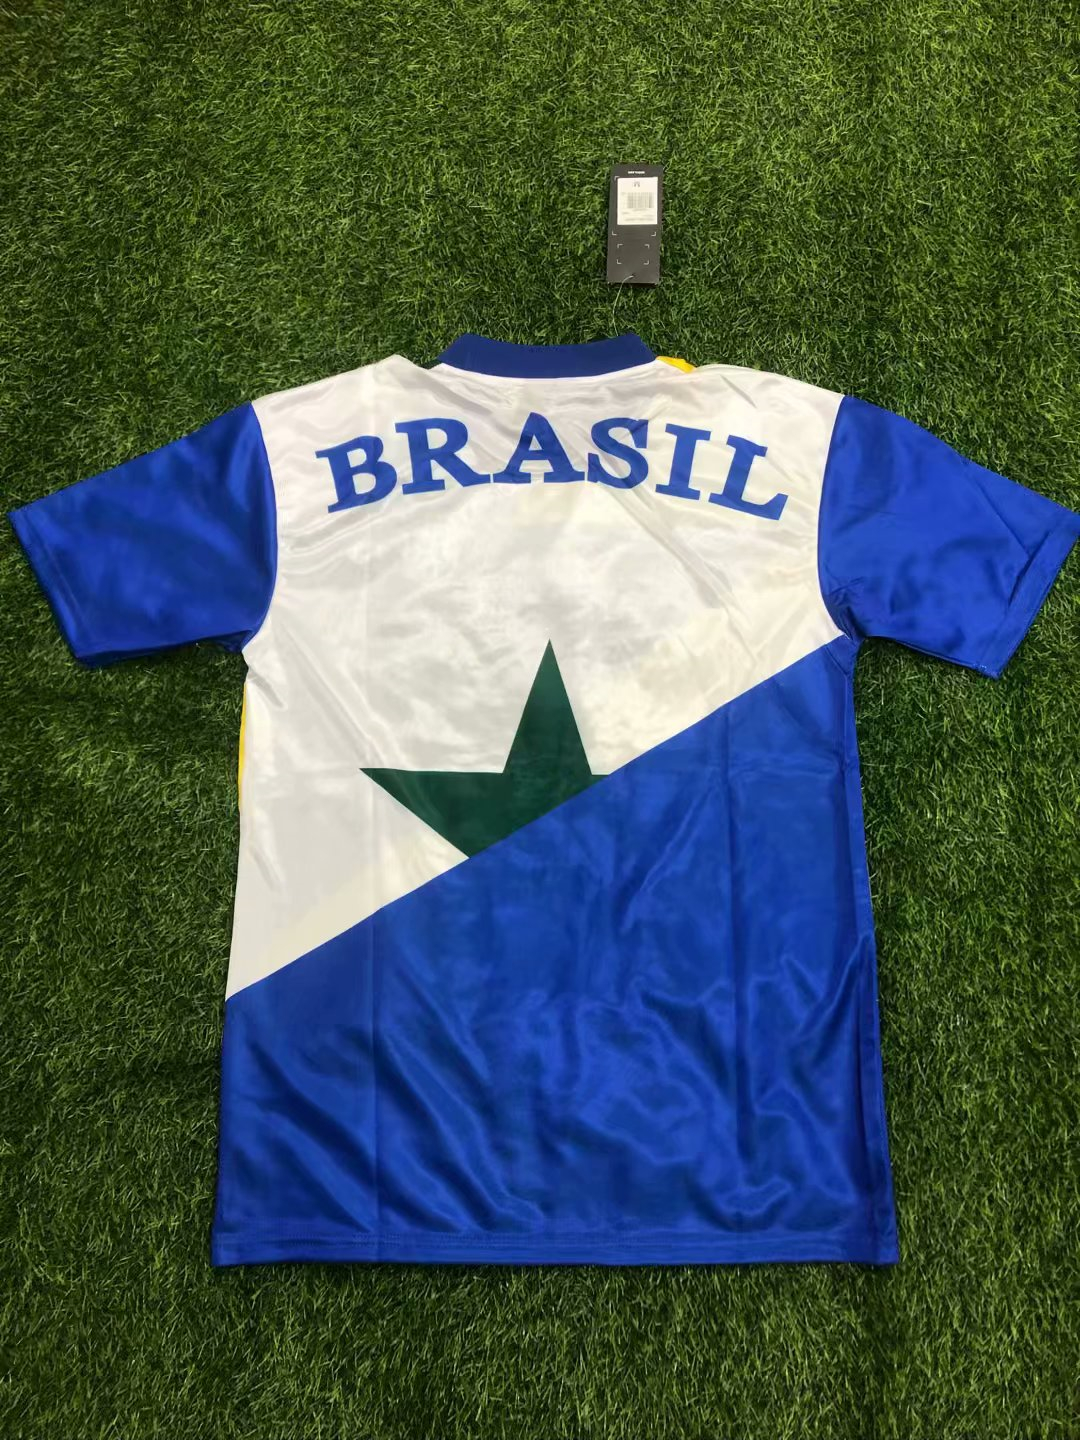 1991-1994 Brazil Retro Away Mens Soccer Jersey Replica 